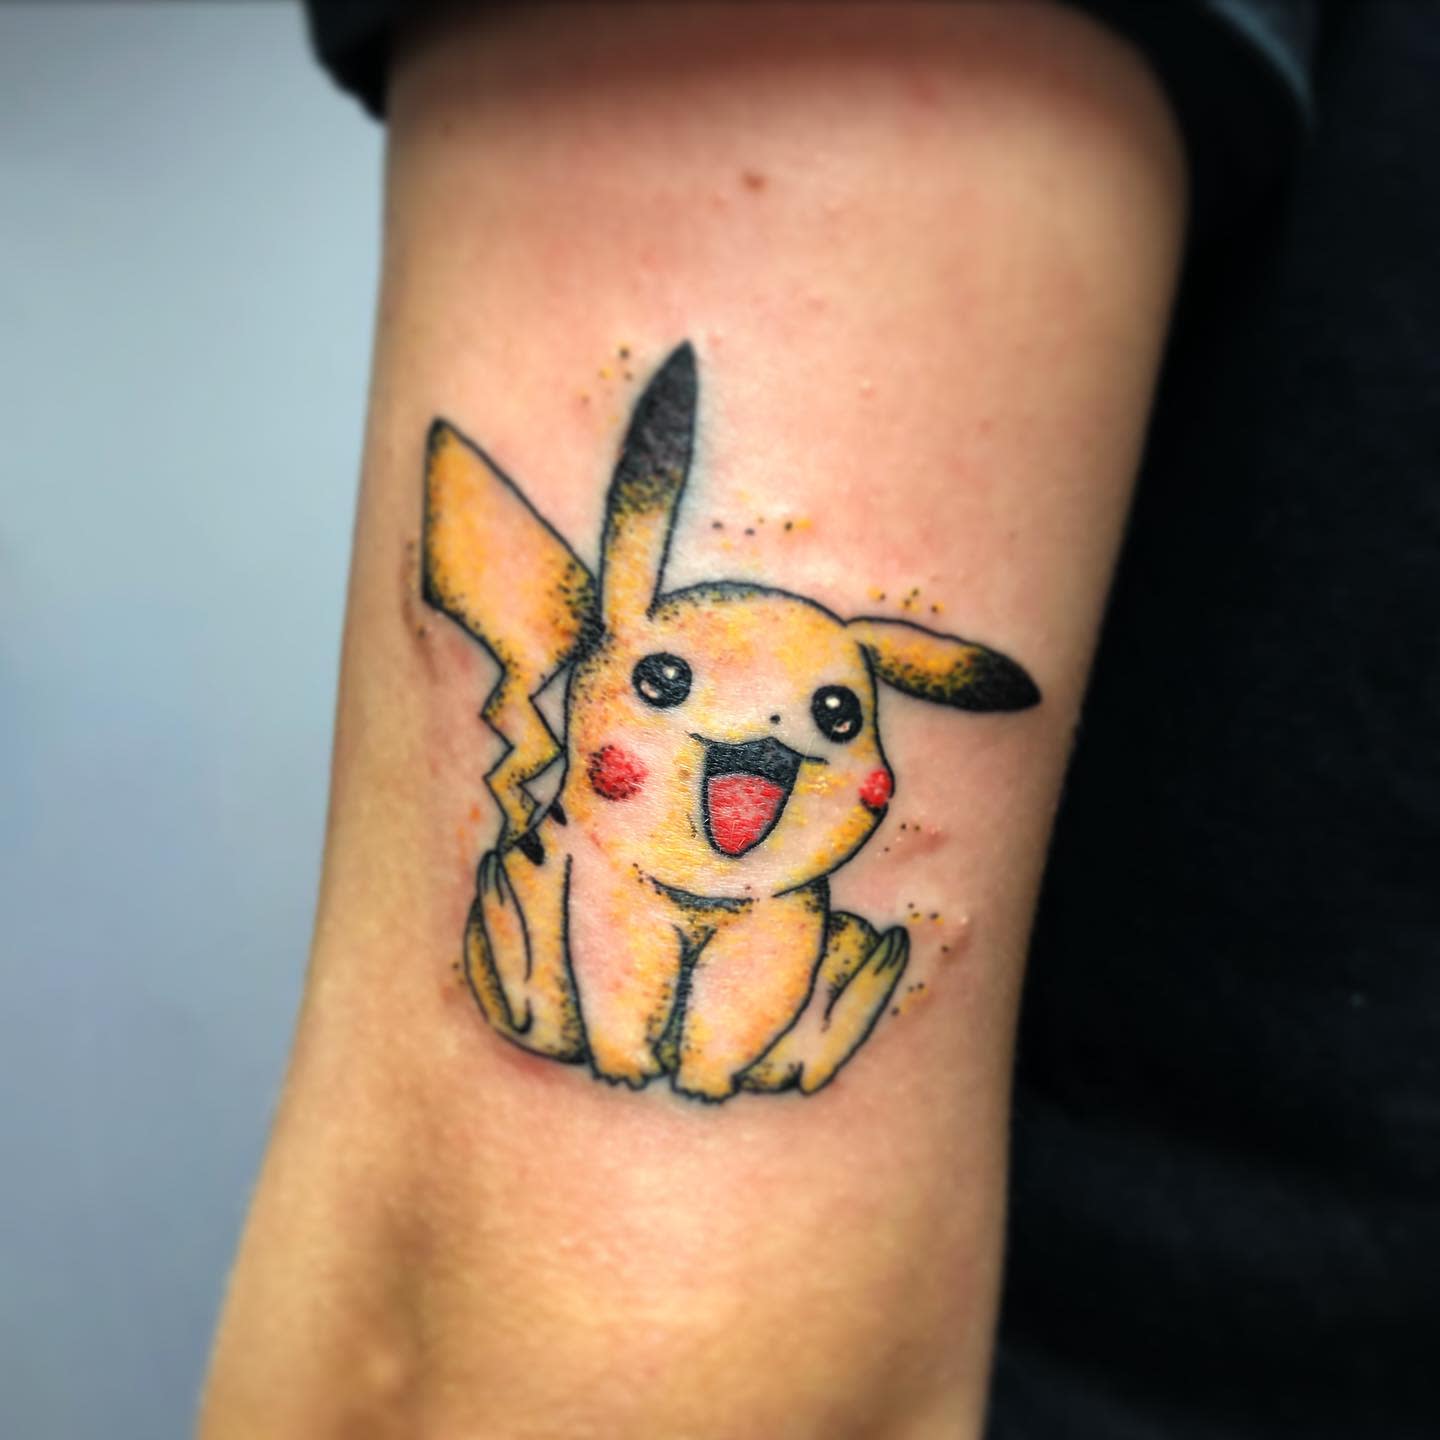 The Top 20 Pikachu Tattoo Ideas - [2022 Inspiration Guide]